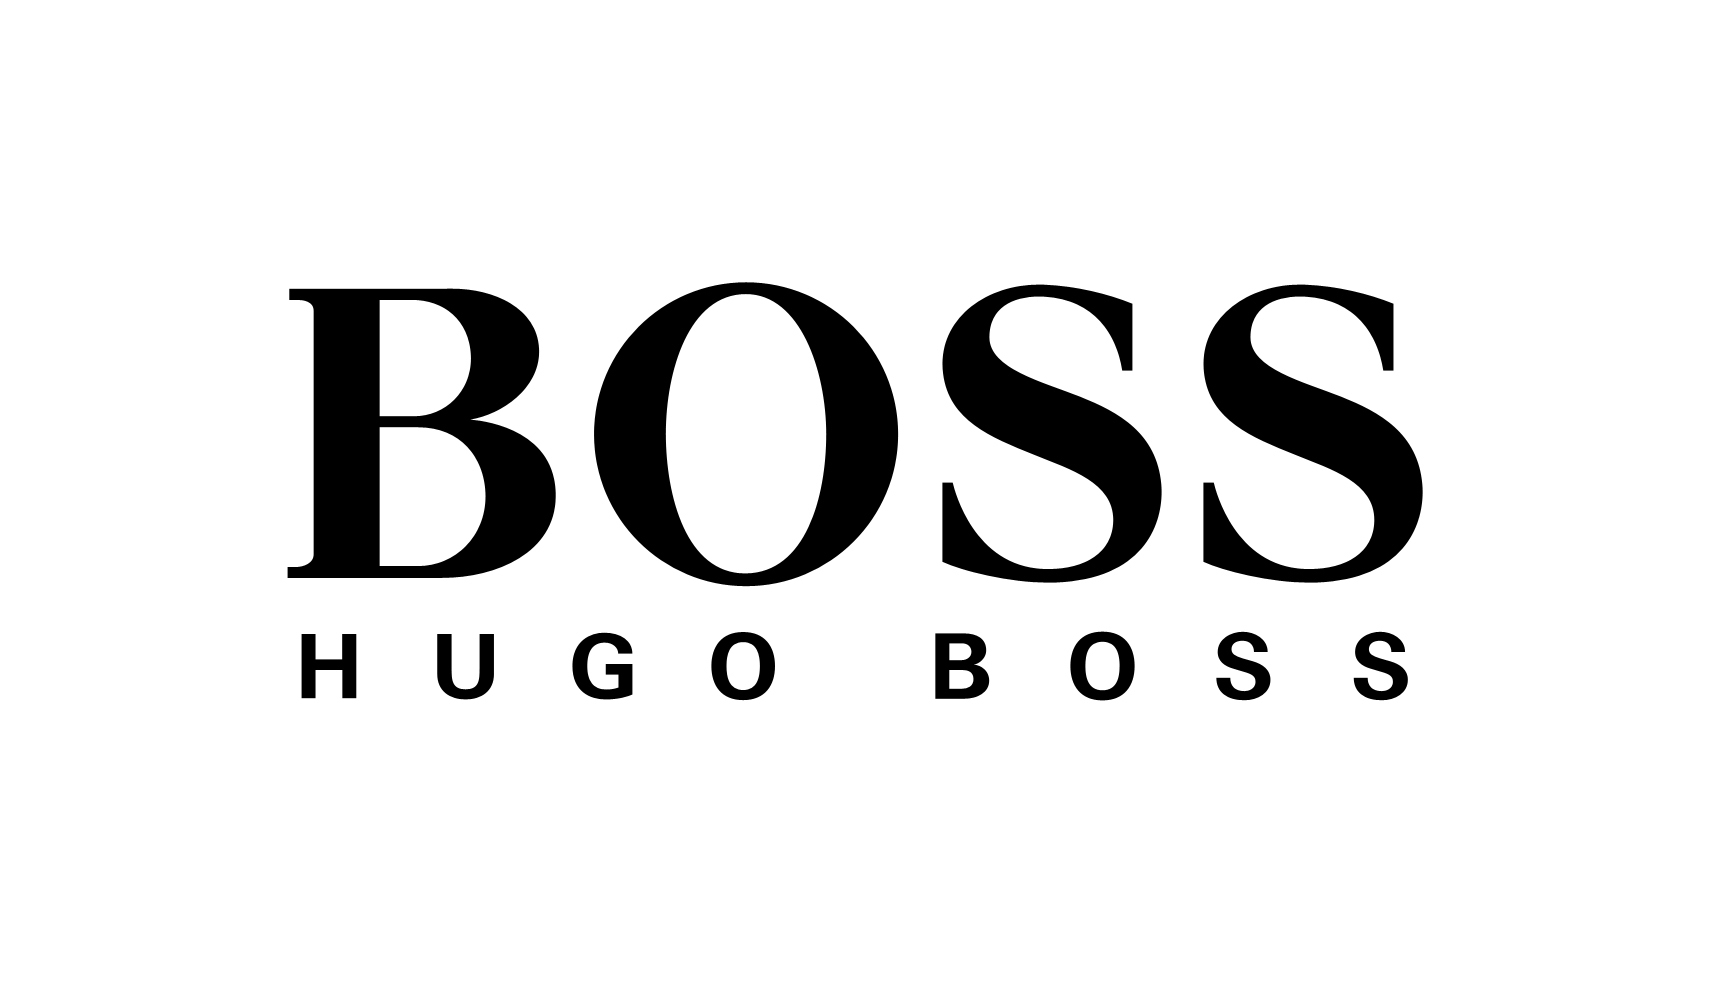 HUGO BOSS - Maintenance Report